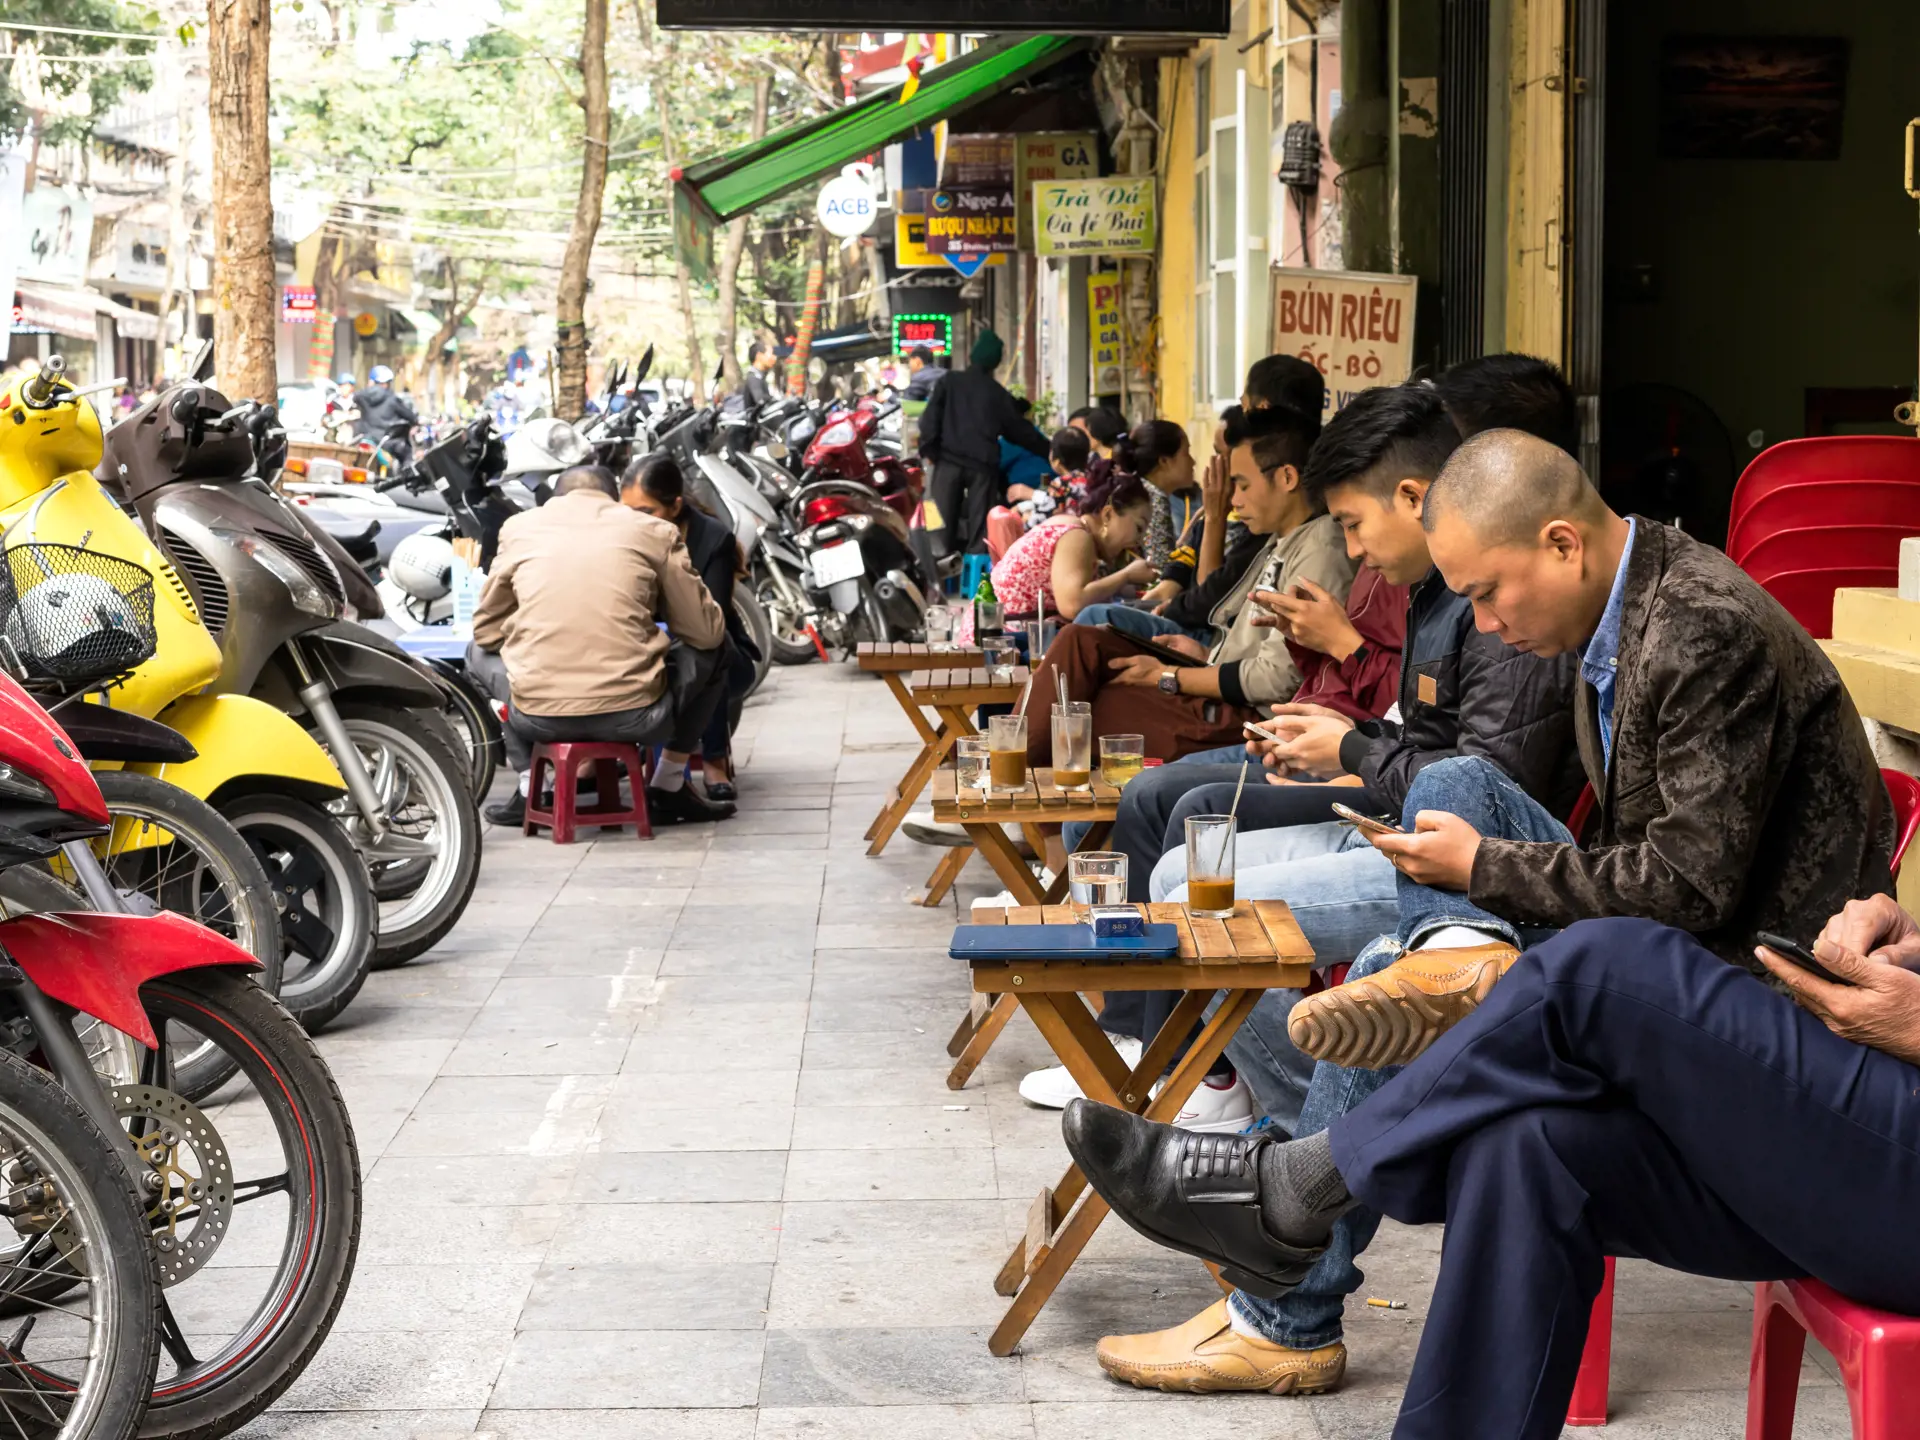 shutterstock_588997853 Hanoi, Vietnam - February 17, 2016 People drink coffee on street at old quarter in Hanoi, Vietnam.jpg